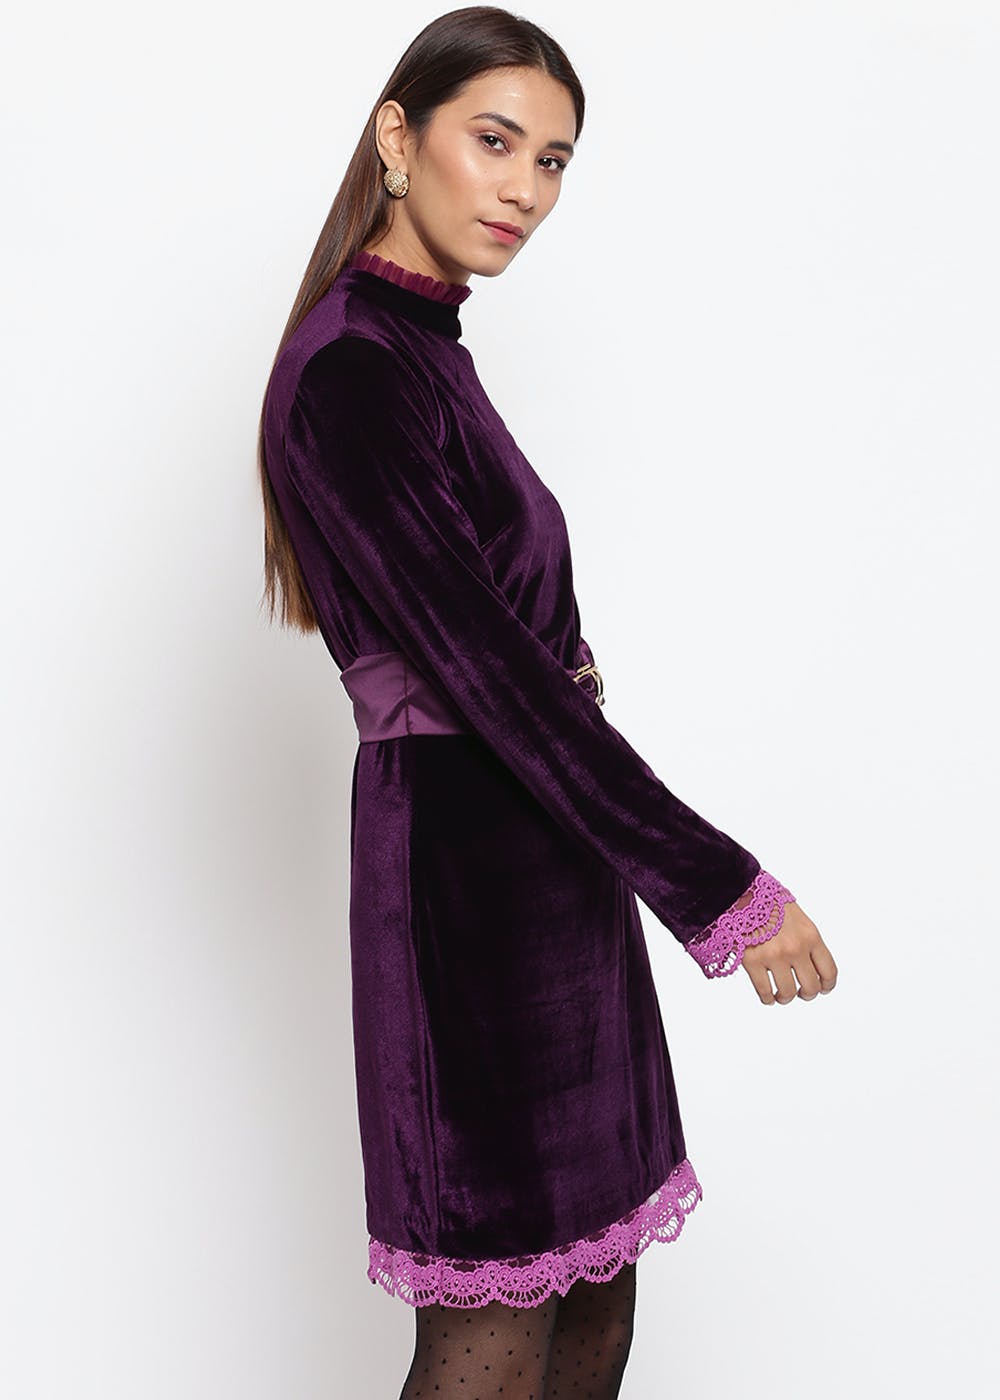 Magenta crushed velvet dress by – Bella Vita Unique Boutique